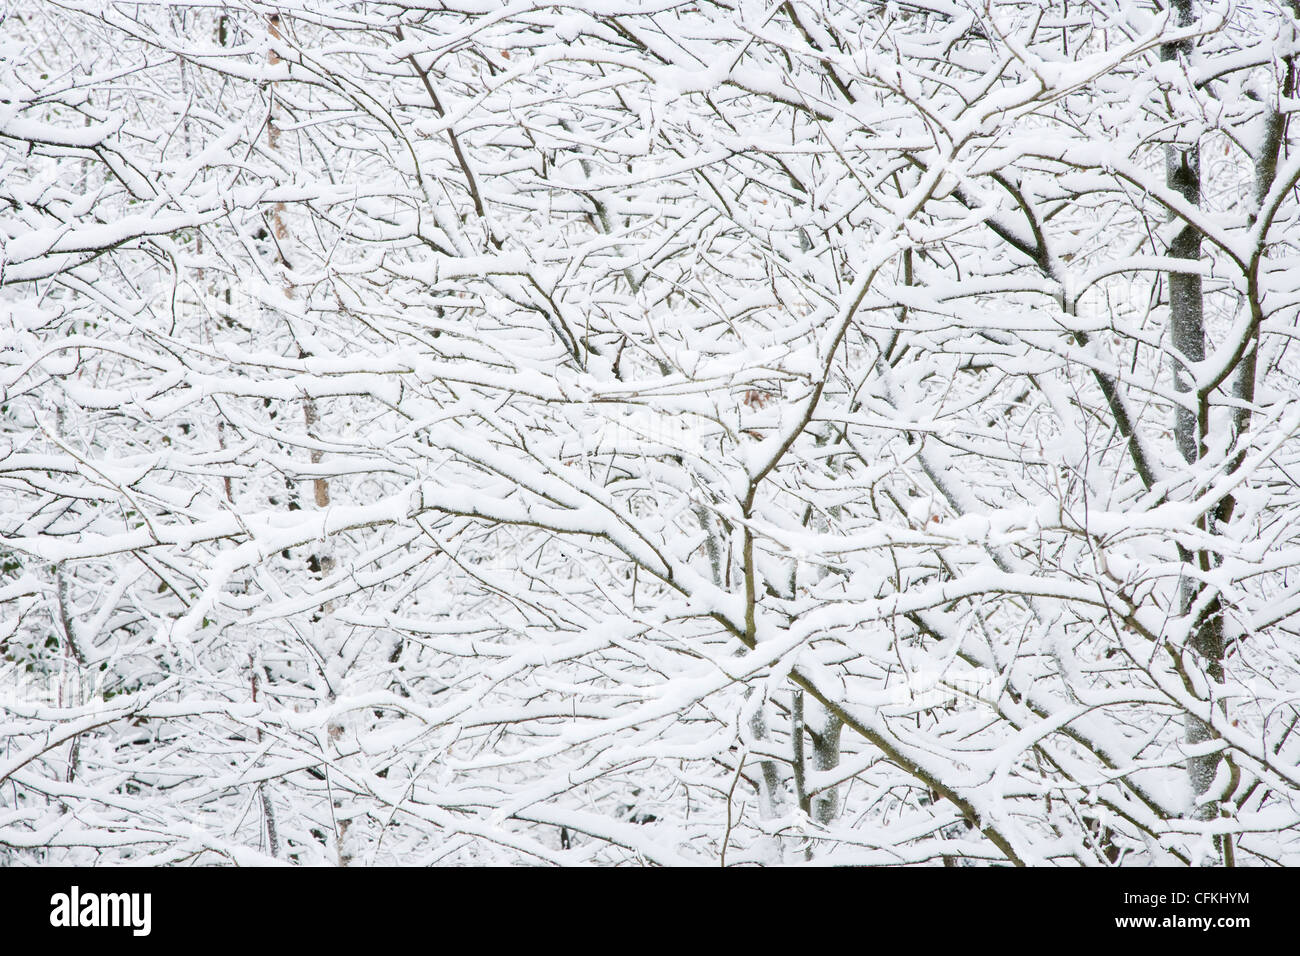 Winter woodland with snow Brentwood Essex, UK LA005559 Stock Photo